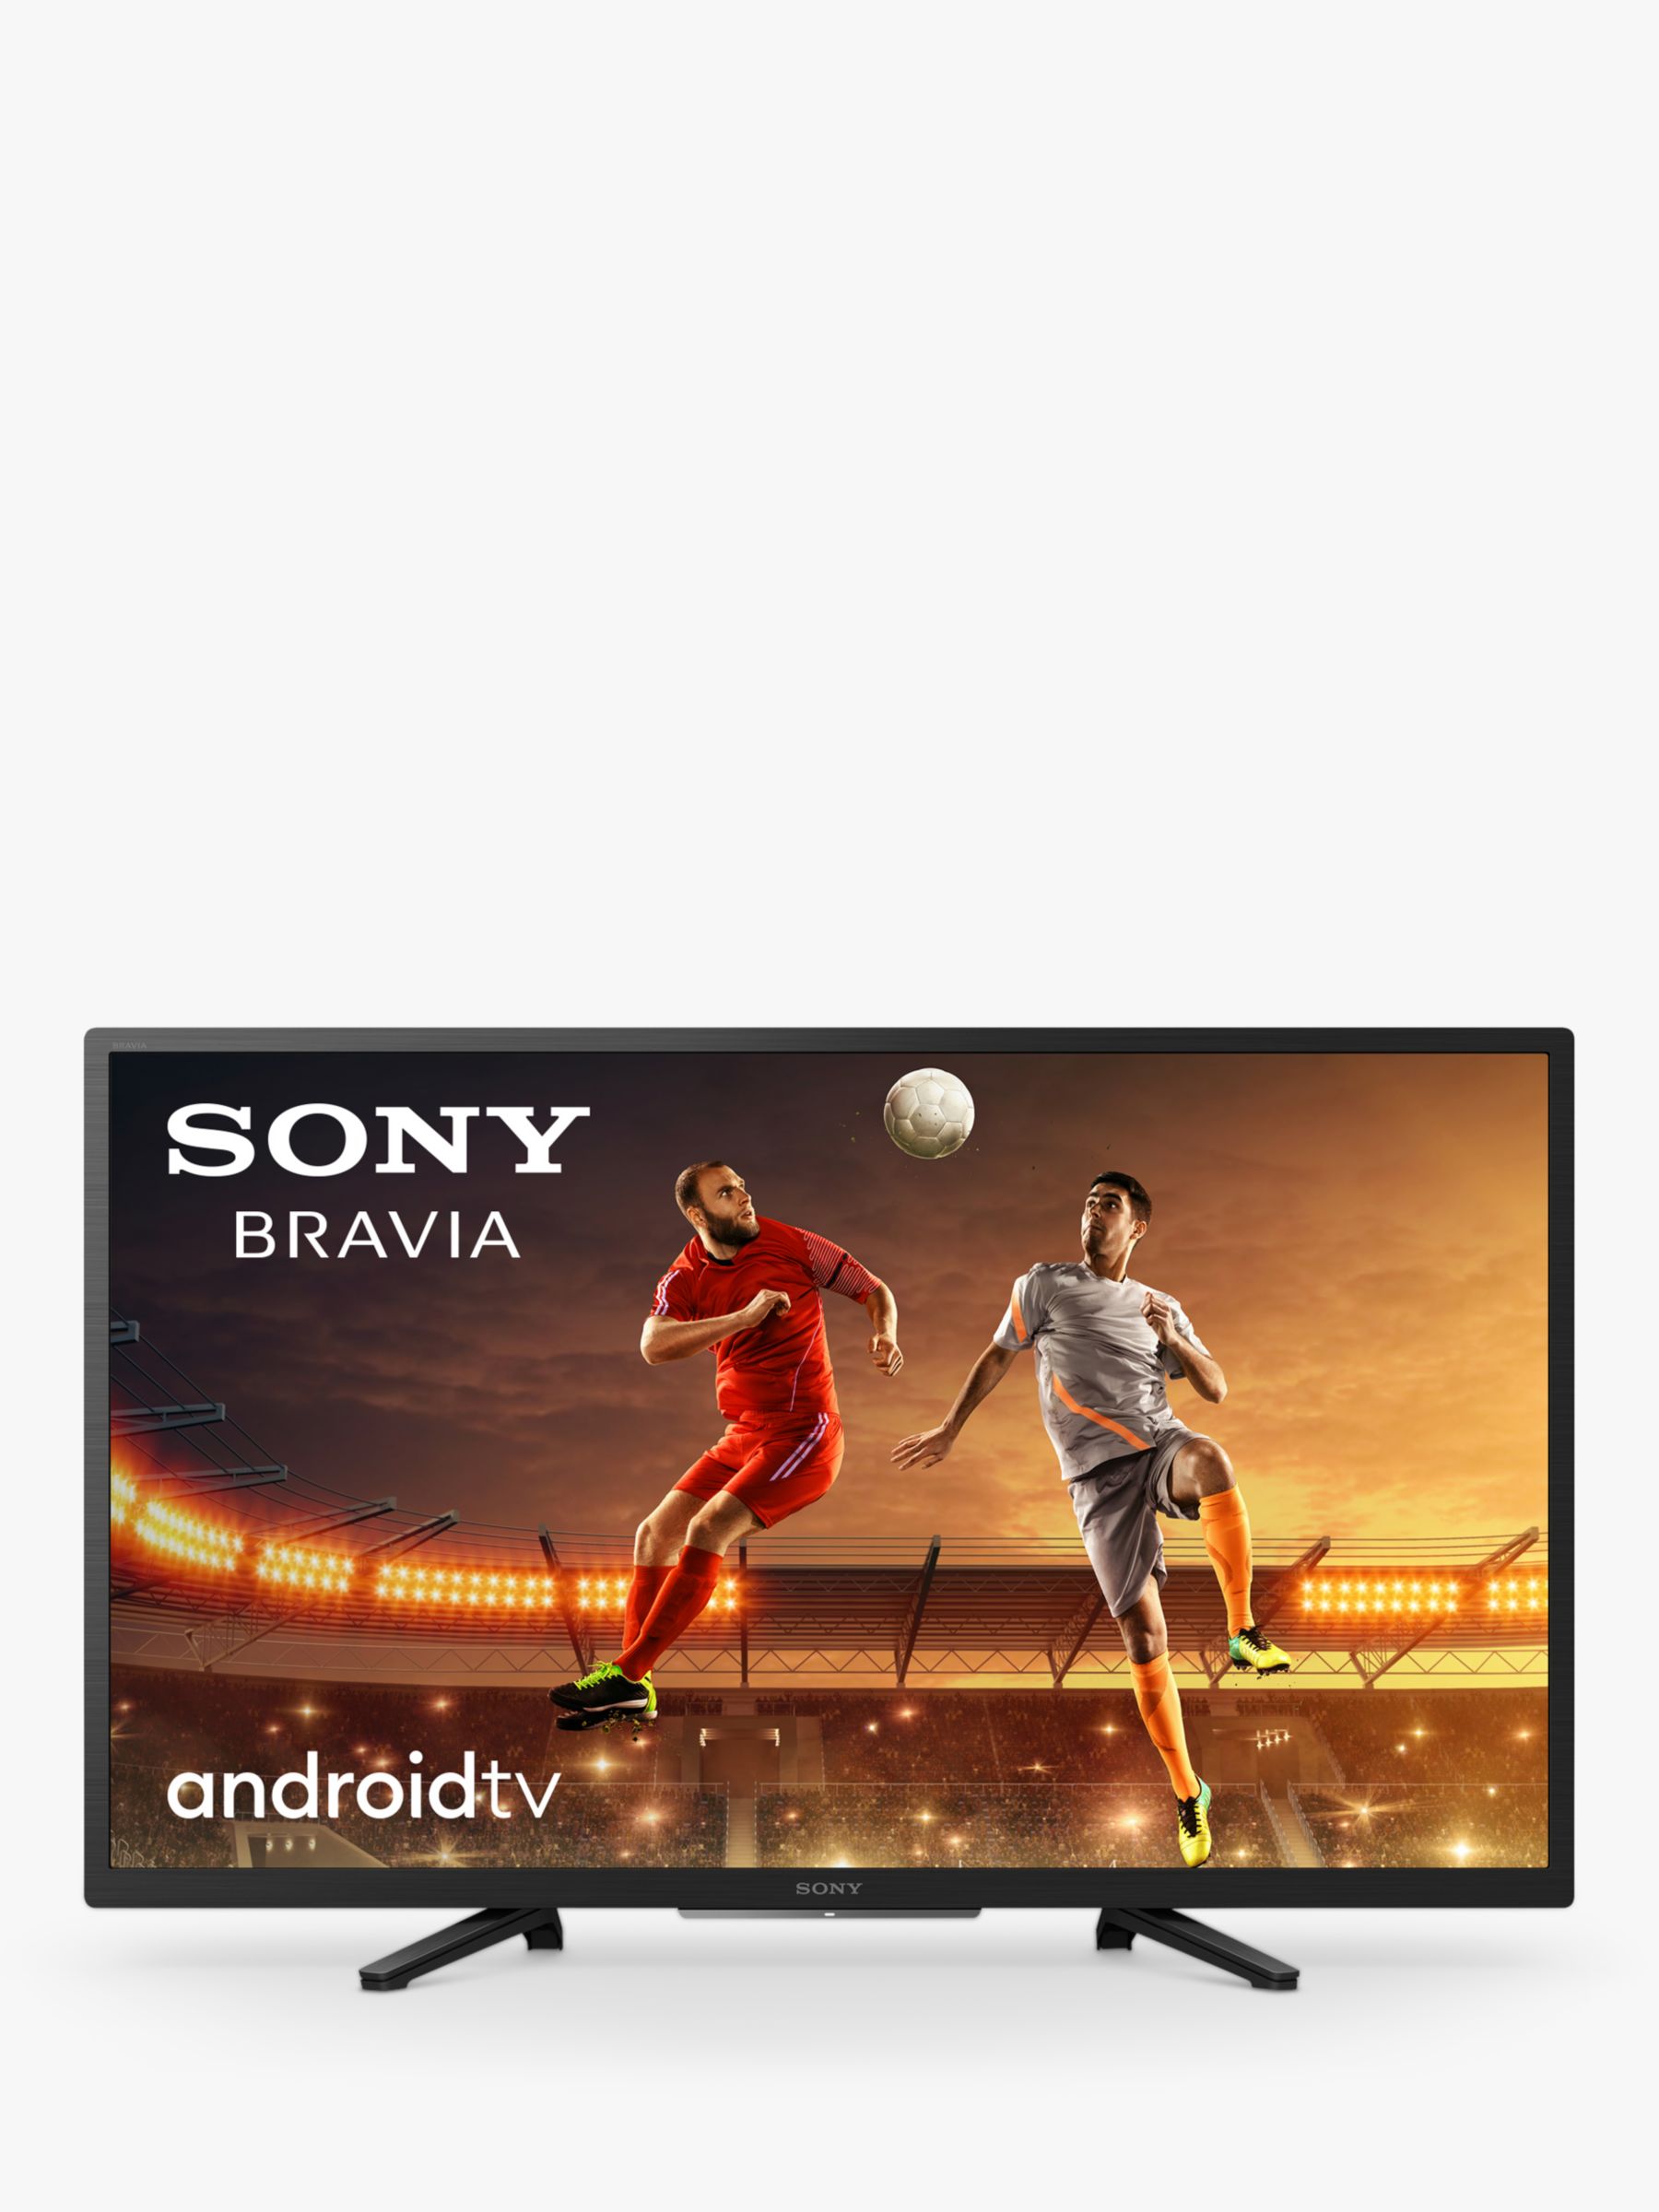 Sony Bravia KD32W800 (2021) LED HDR HD Ready 720p Smart